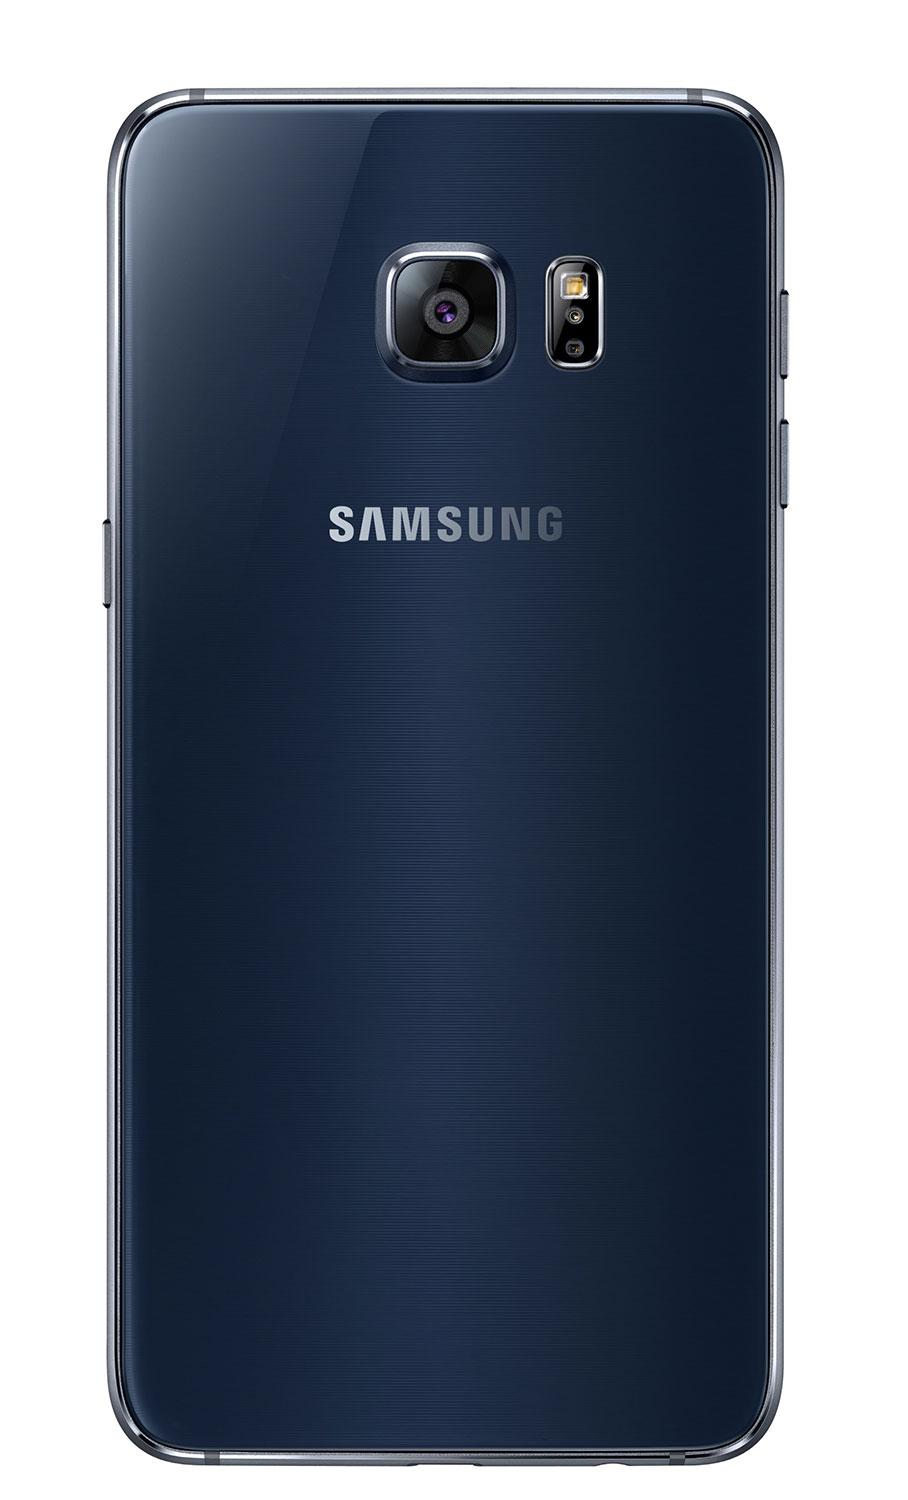 Samsung Galaxy S6 Edge Plus cámara trasera color azul